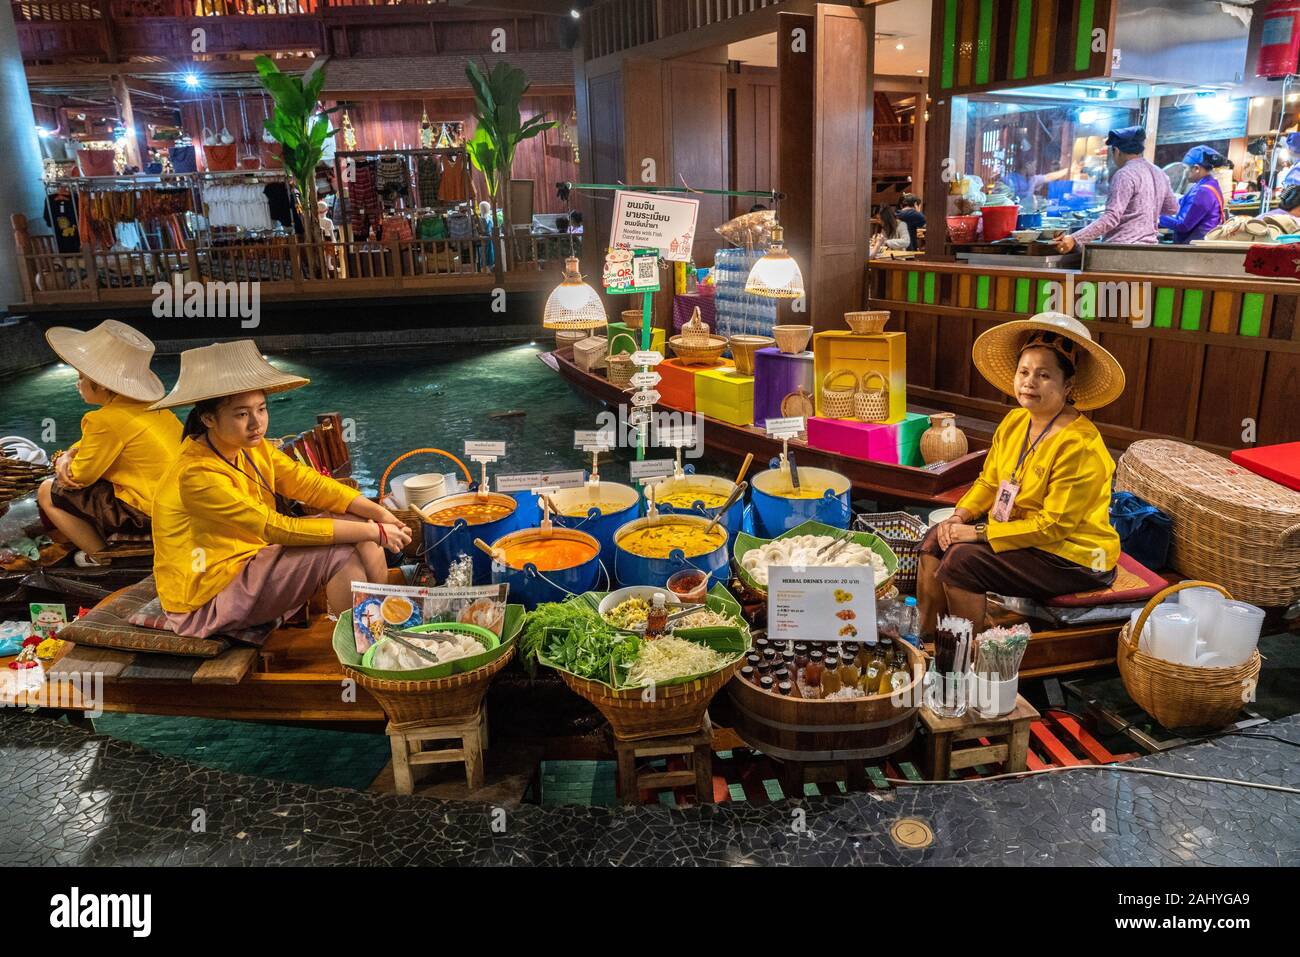 Icon Siam Floating Food Court - Delicious! (Bangkok) 